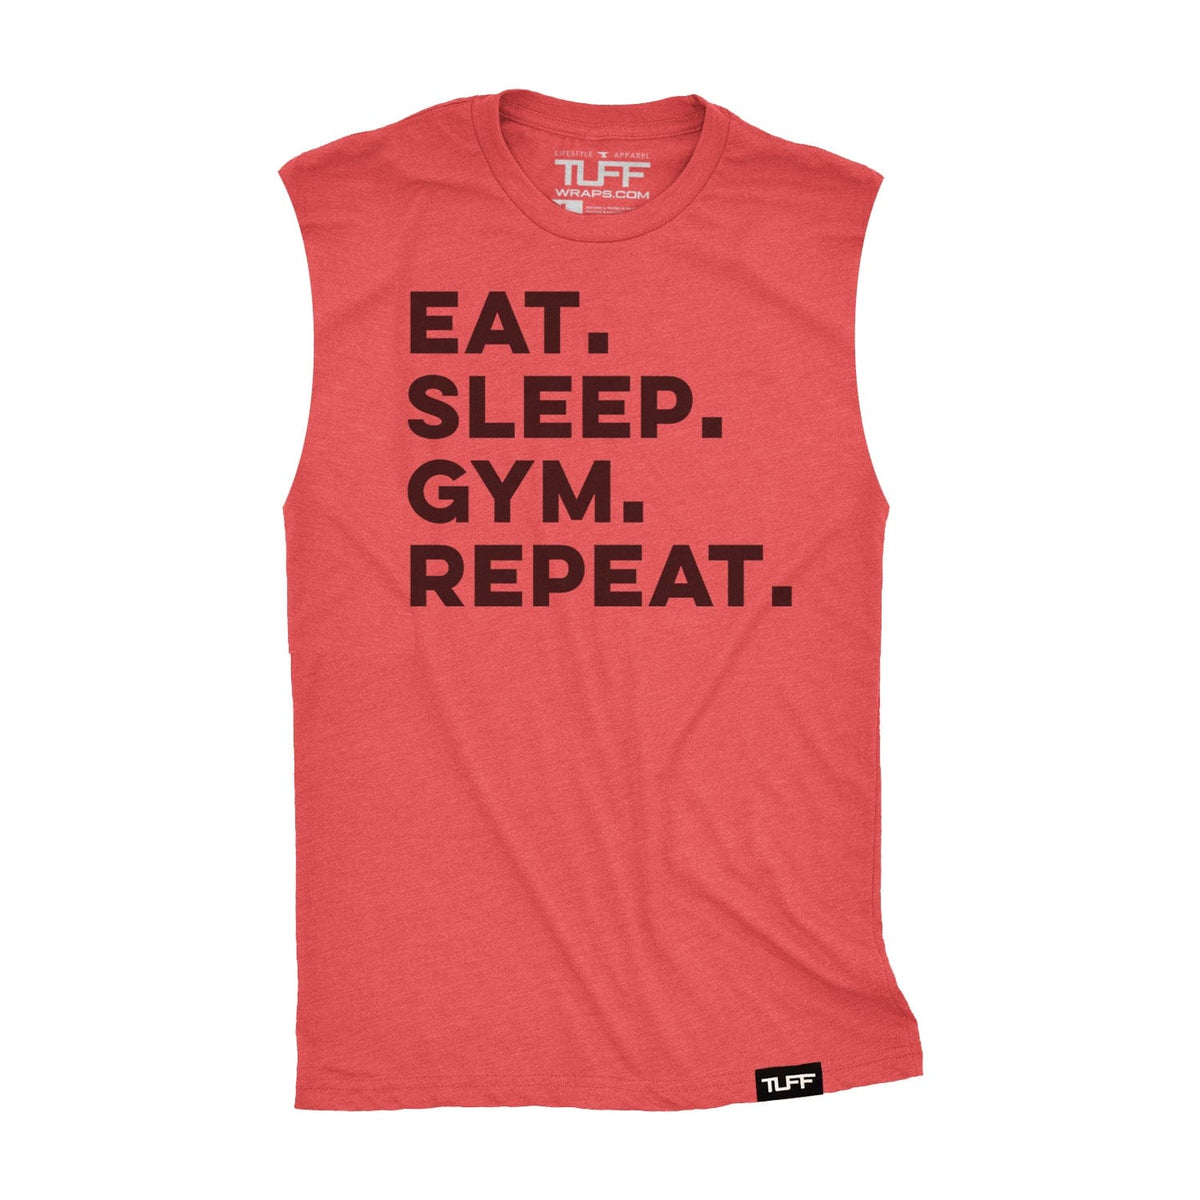 Eat. Sleep. Gym. Repeat. Raw Edge Muscle Tank S / Vintage Red TuffWraps.com